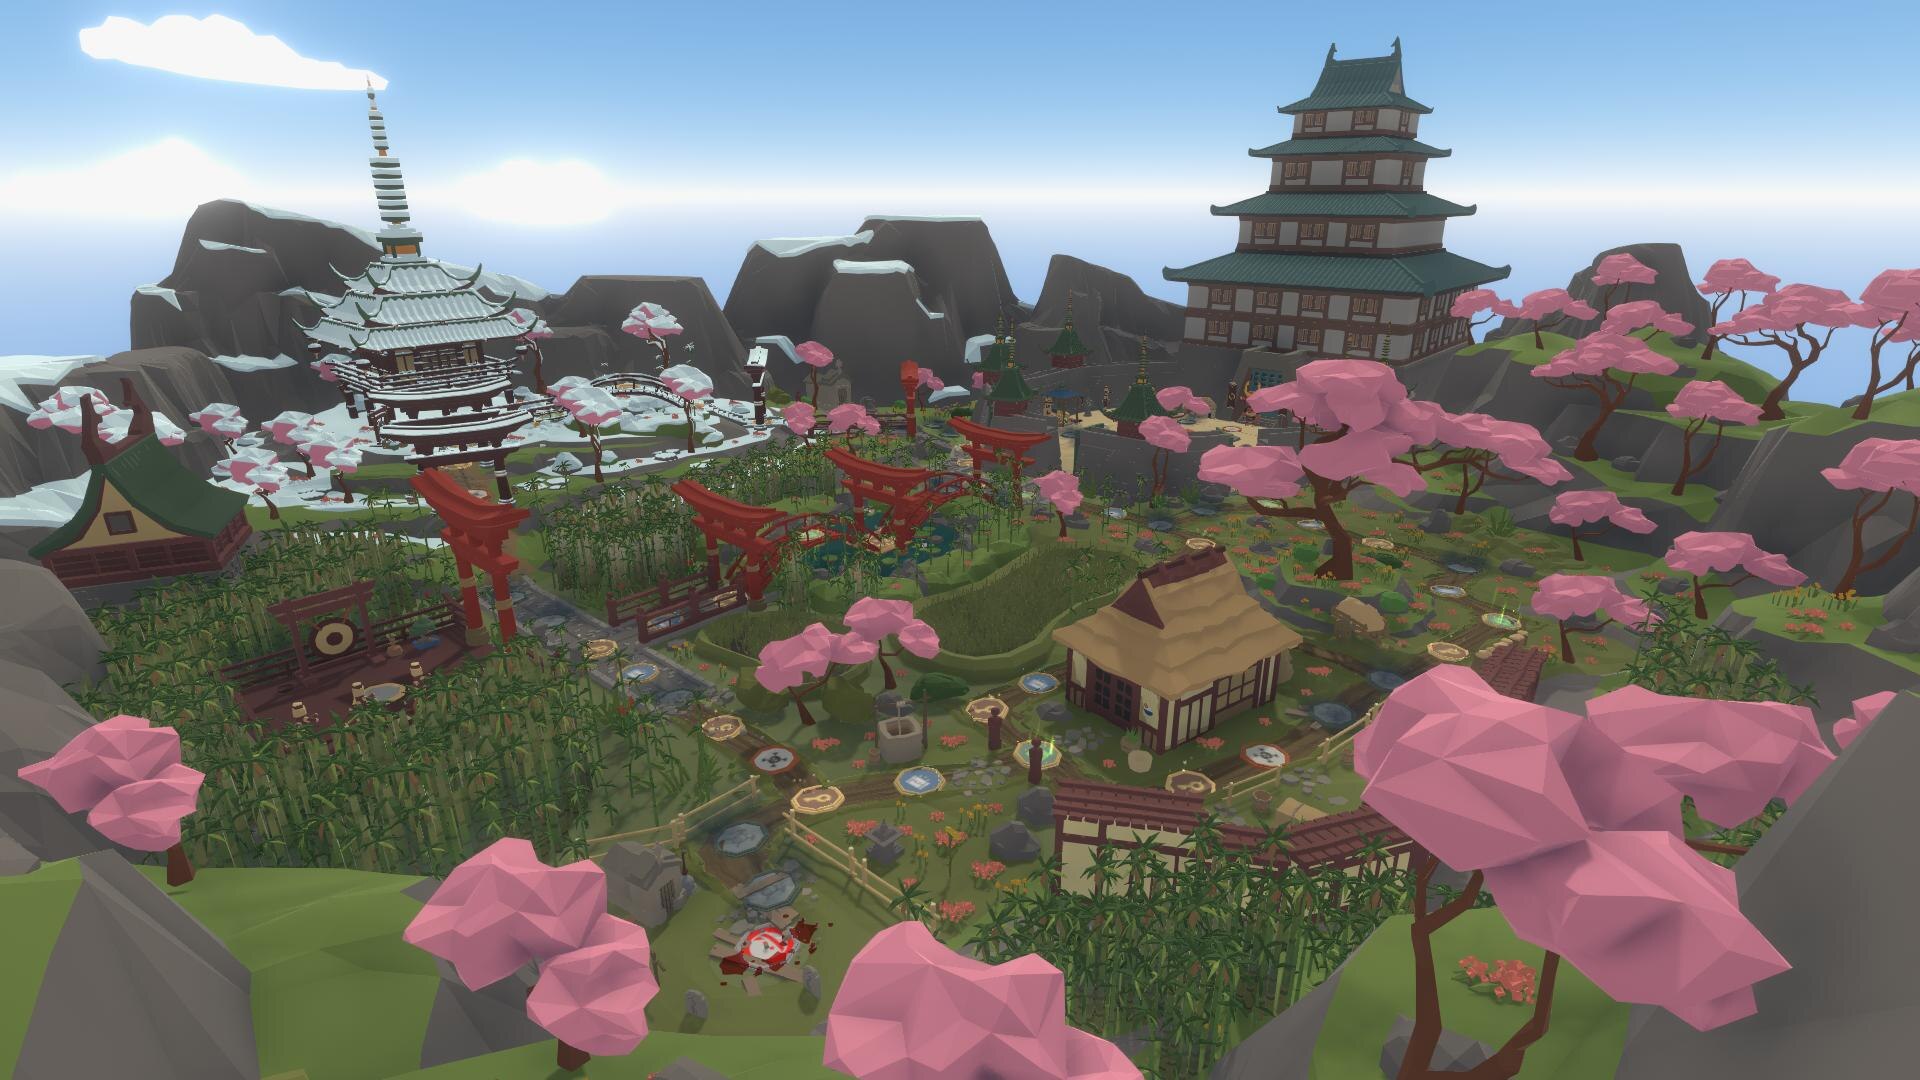 japanese pagoda i made in a creative realm! : r/Minecraft